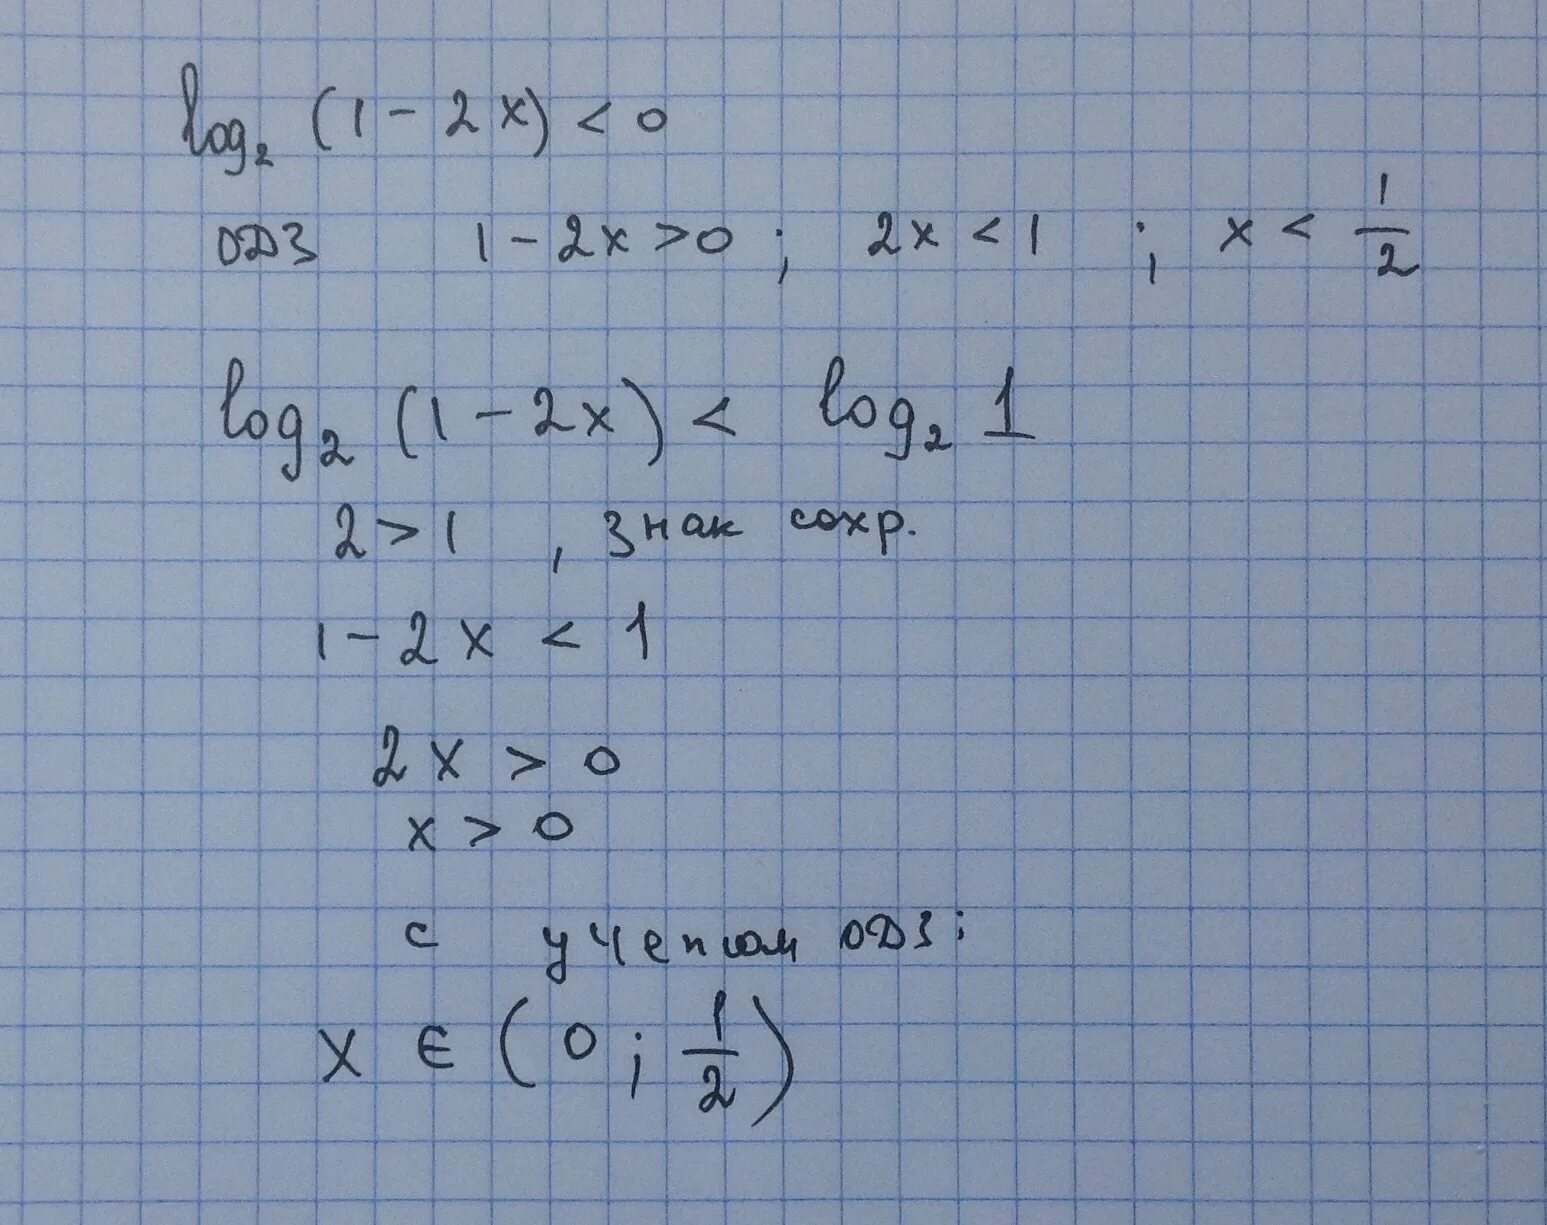 Log 1 2 7x 1 2. Множество решений неравенства x > 0. Найдите множество натуральных решений неравенства. Множество решений неравенства log0,8(x+8)-log0.8(2-2x)>=0. Найдите множество решений неравенства 5x + 2.